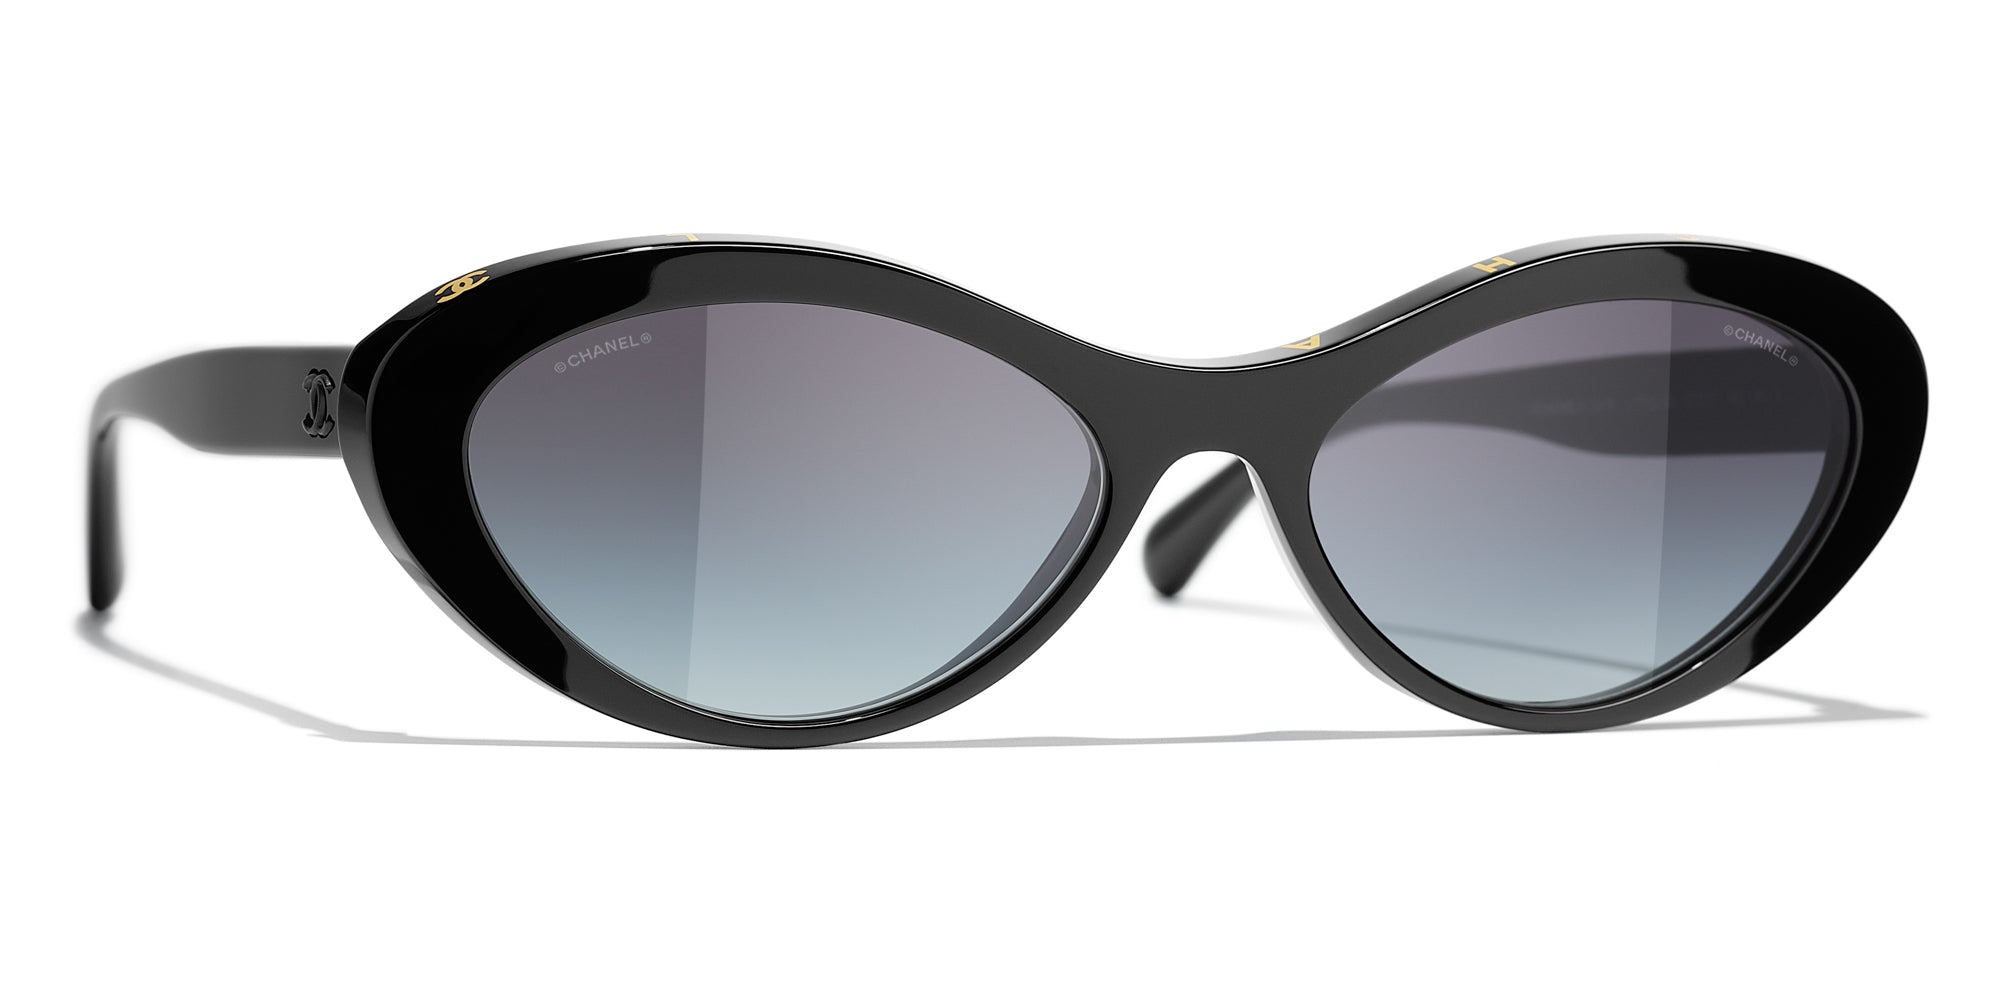 Chanel 5416 Oval Sunglasses